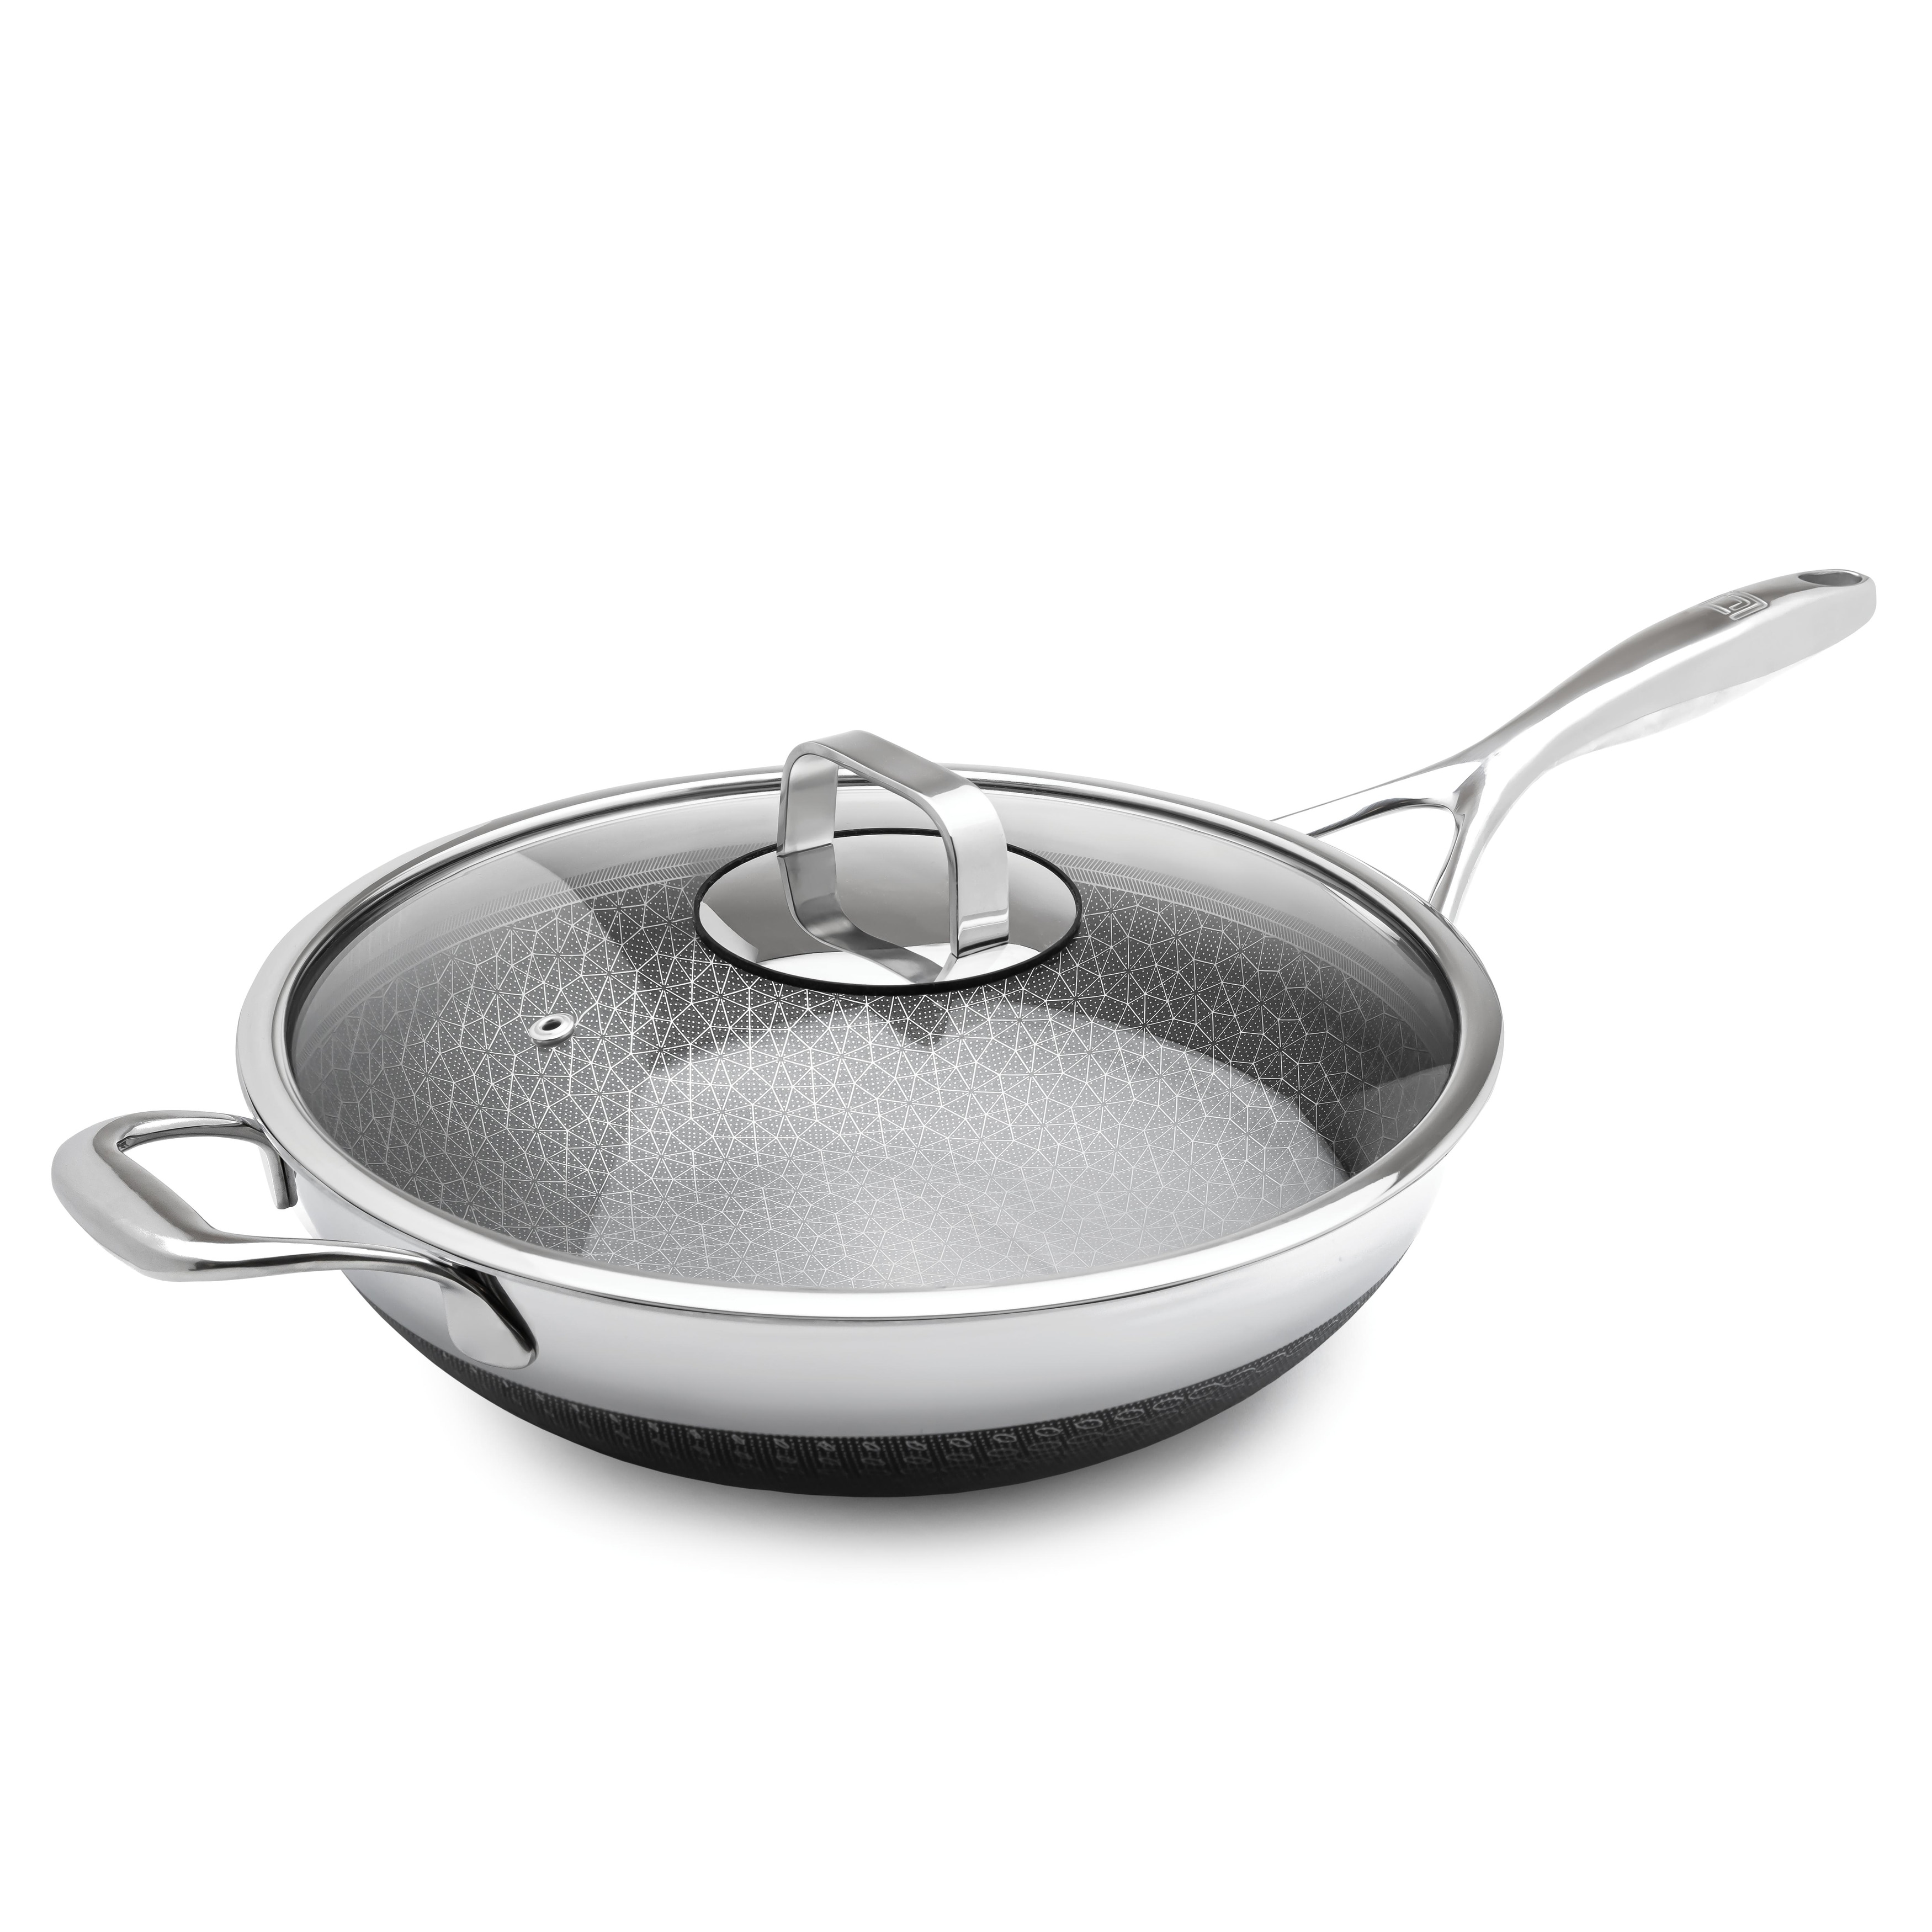 Premium Nonstick Frying Pan with Lid, 12 Inch, PFOA-Free